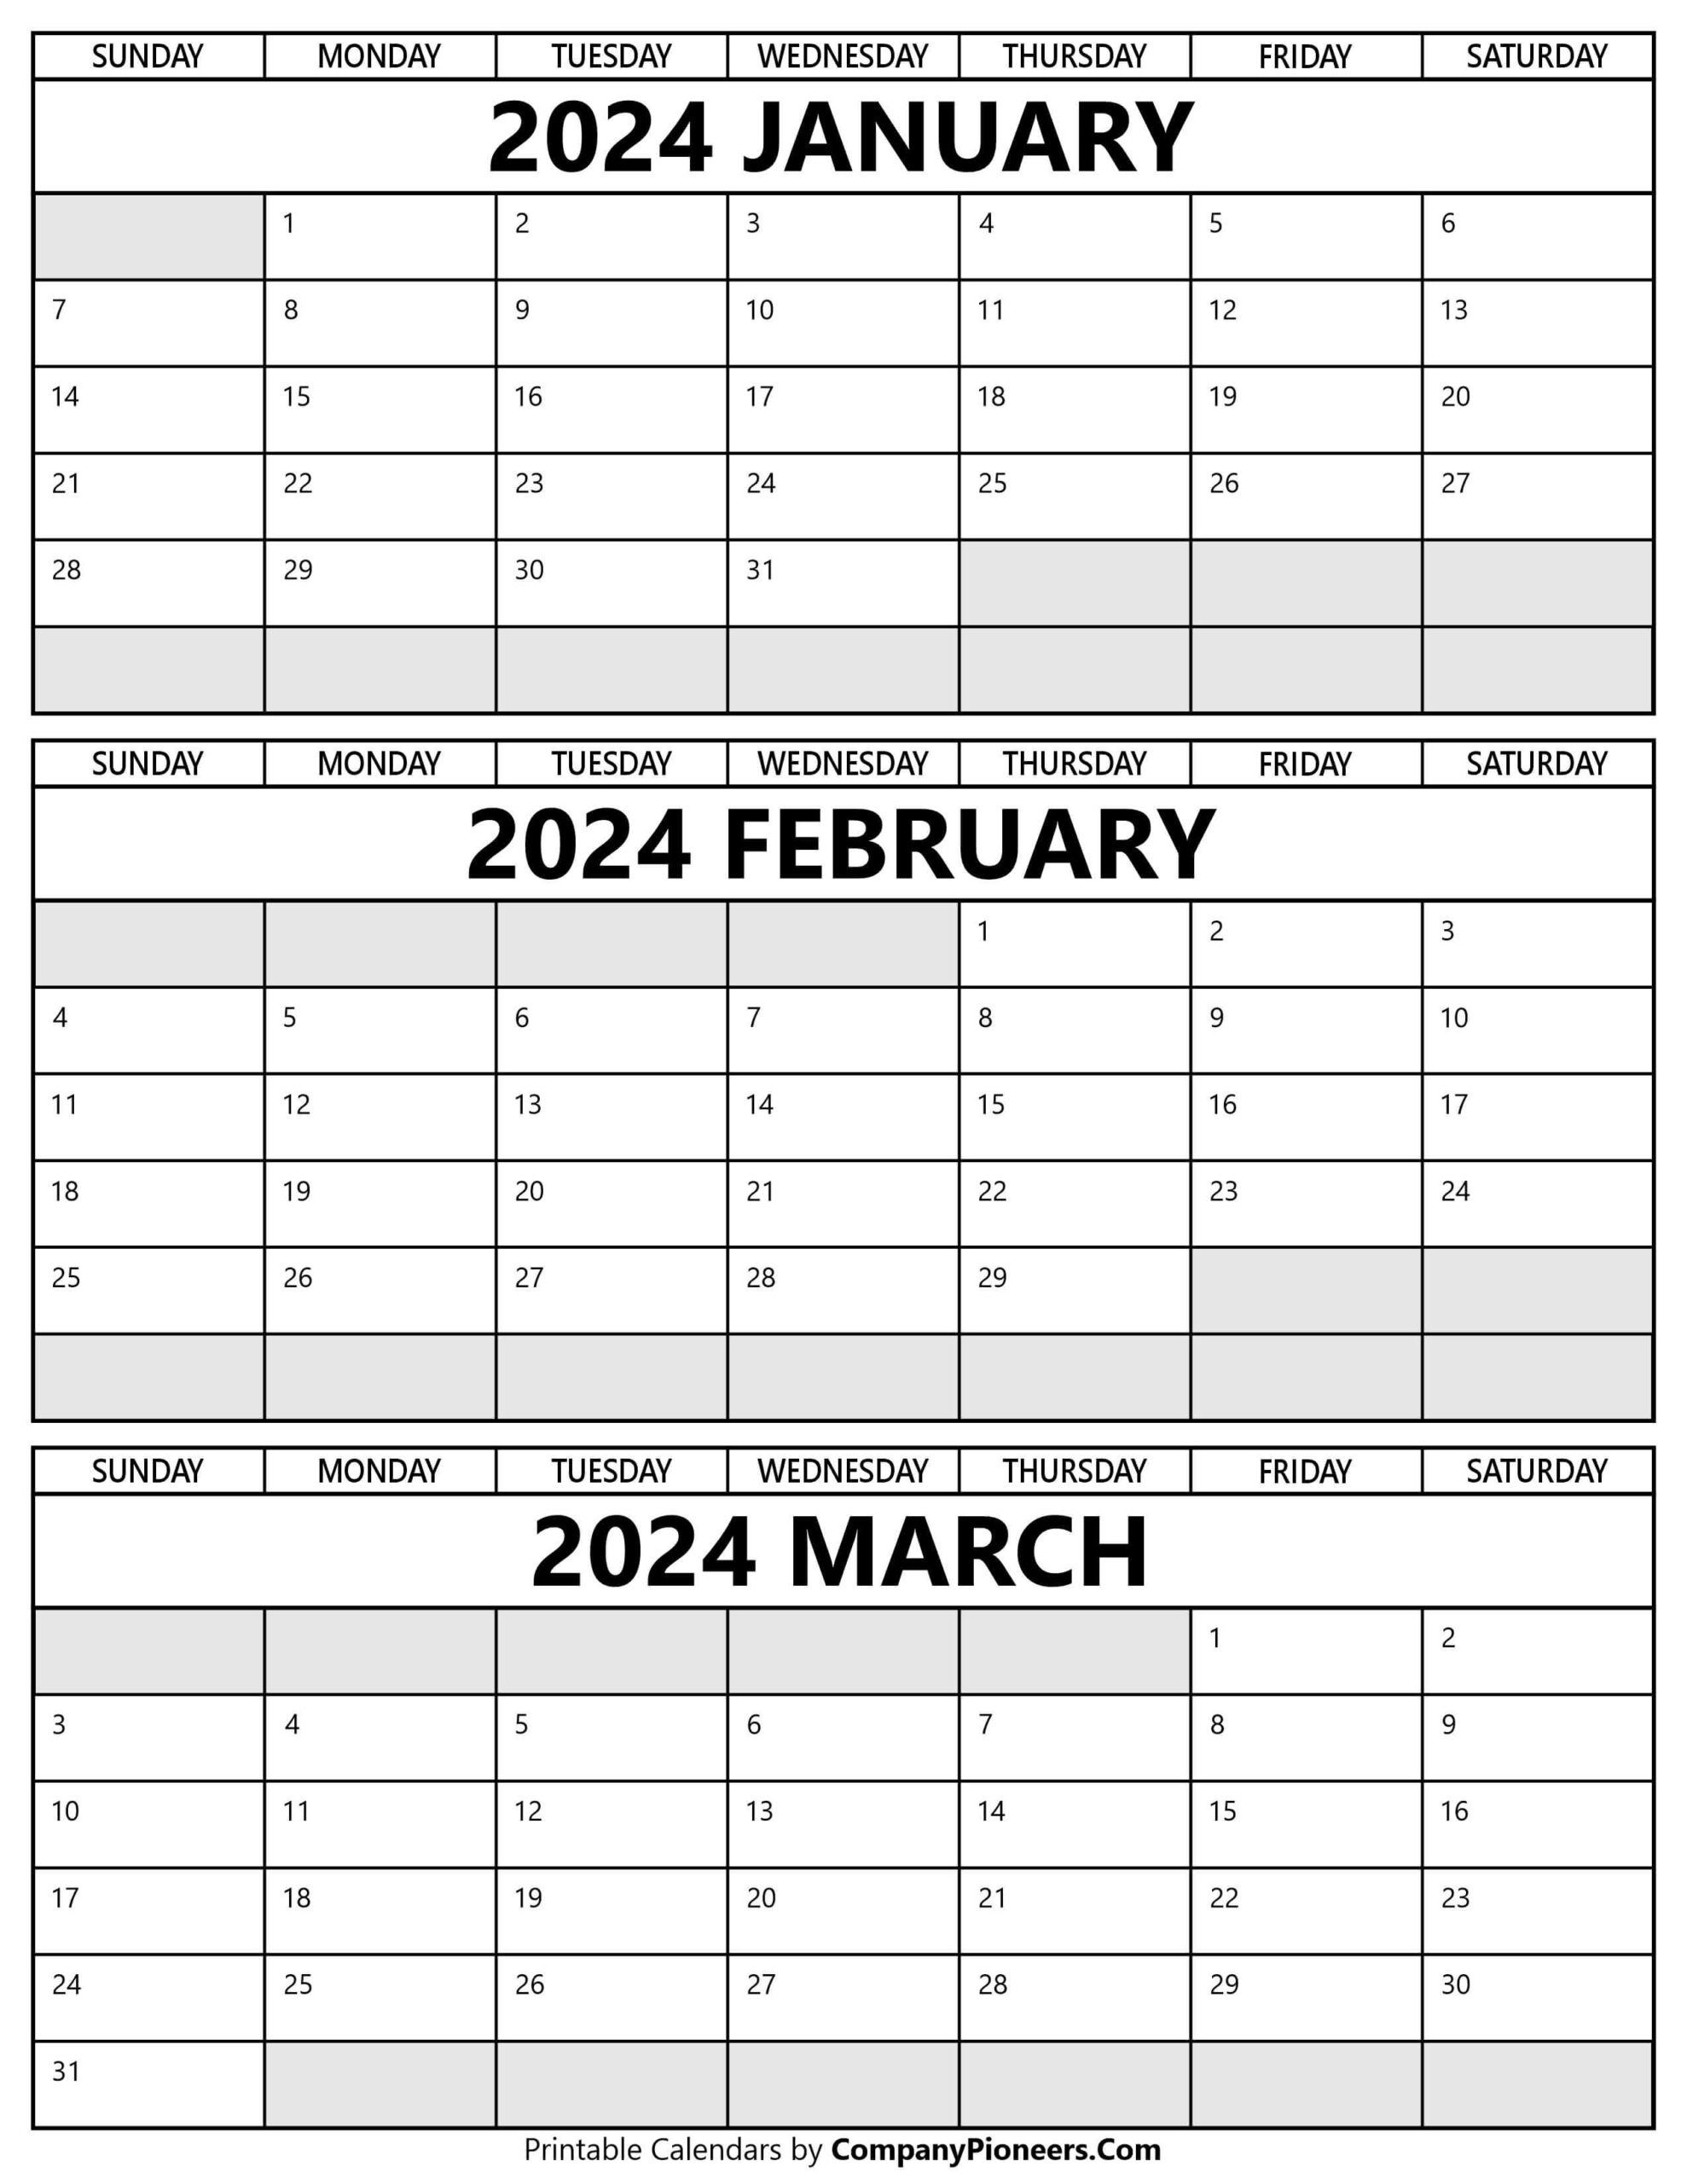 January February March 2024 Calendar Printable - Template | Printable Calendar 2024 January February March